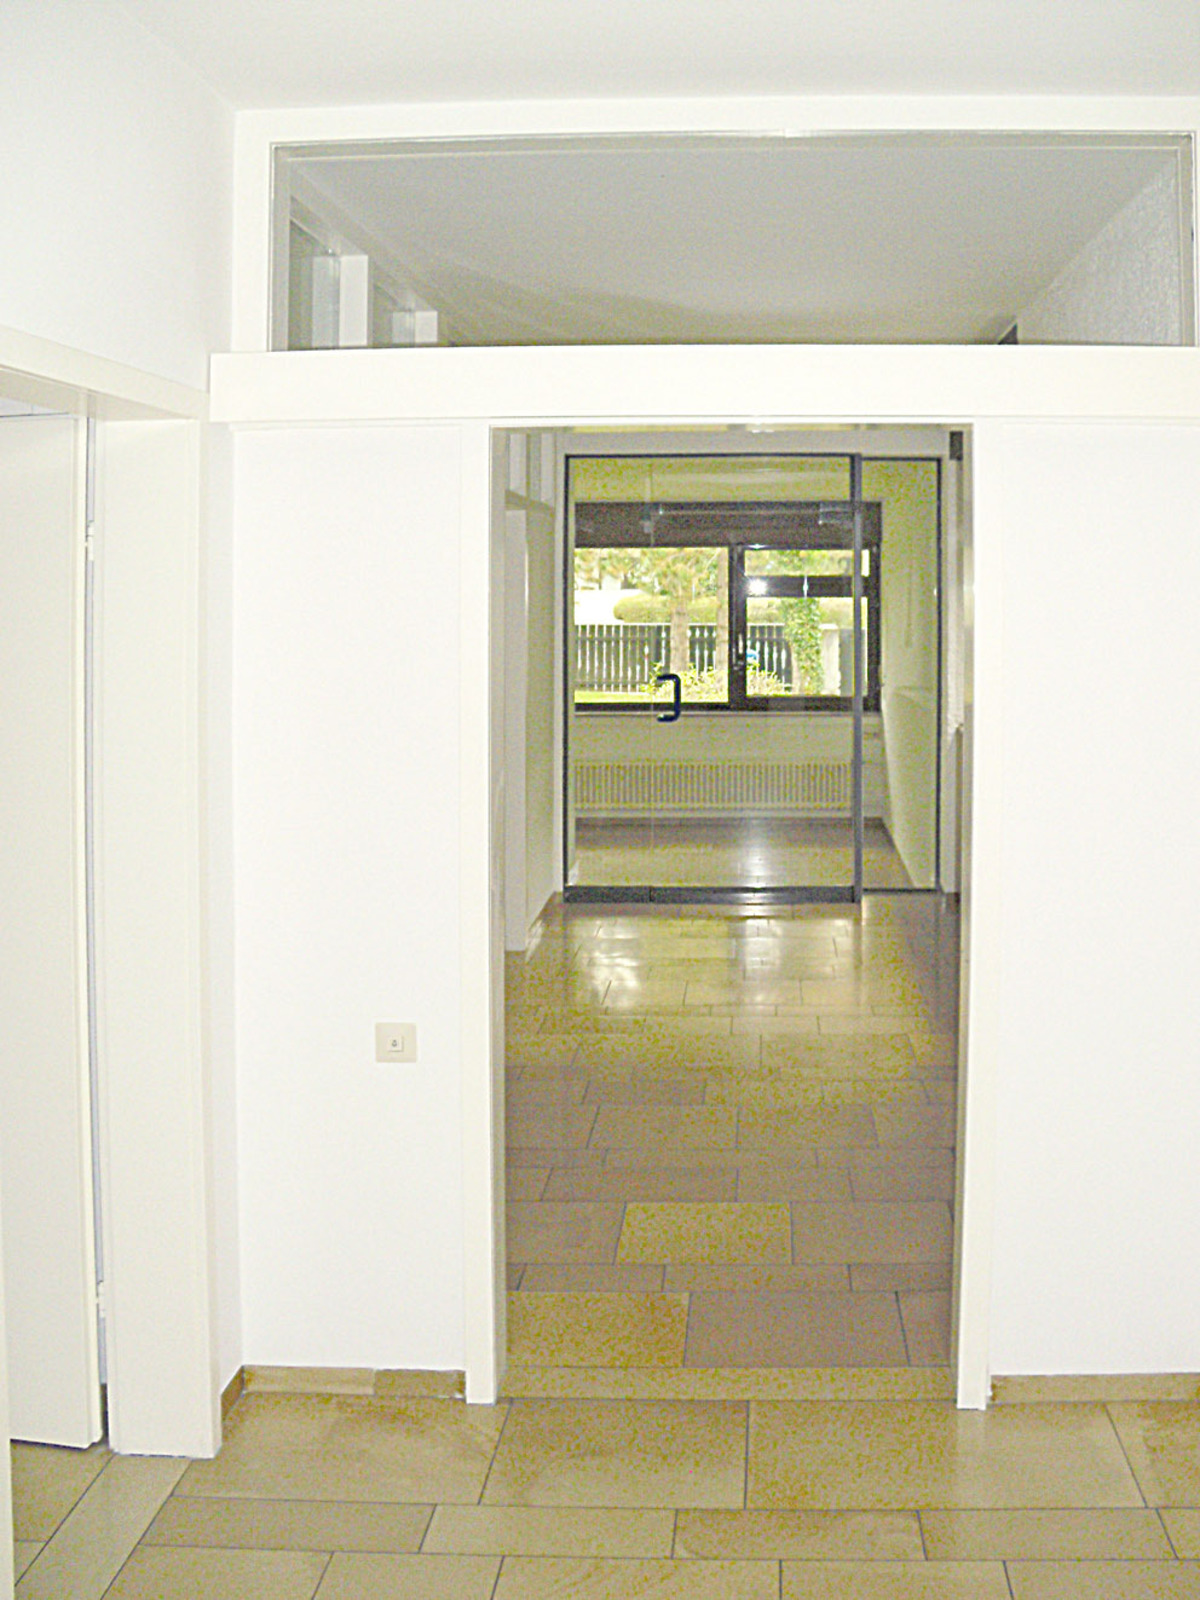 Büro sZ6f Sollner Straße 9 in Munich, Obersendling